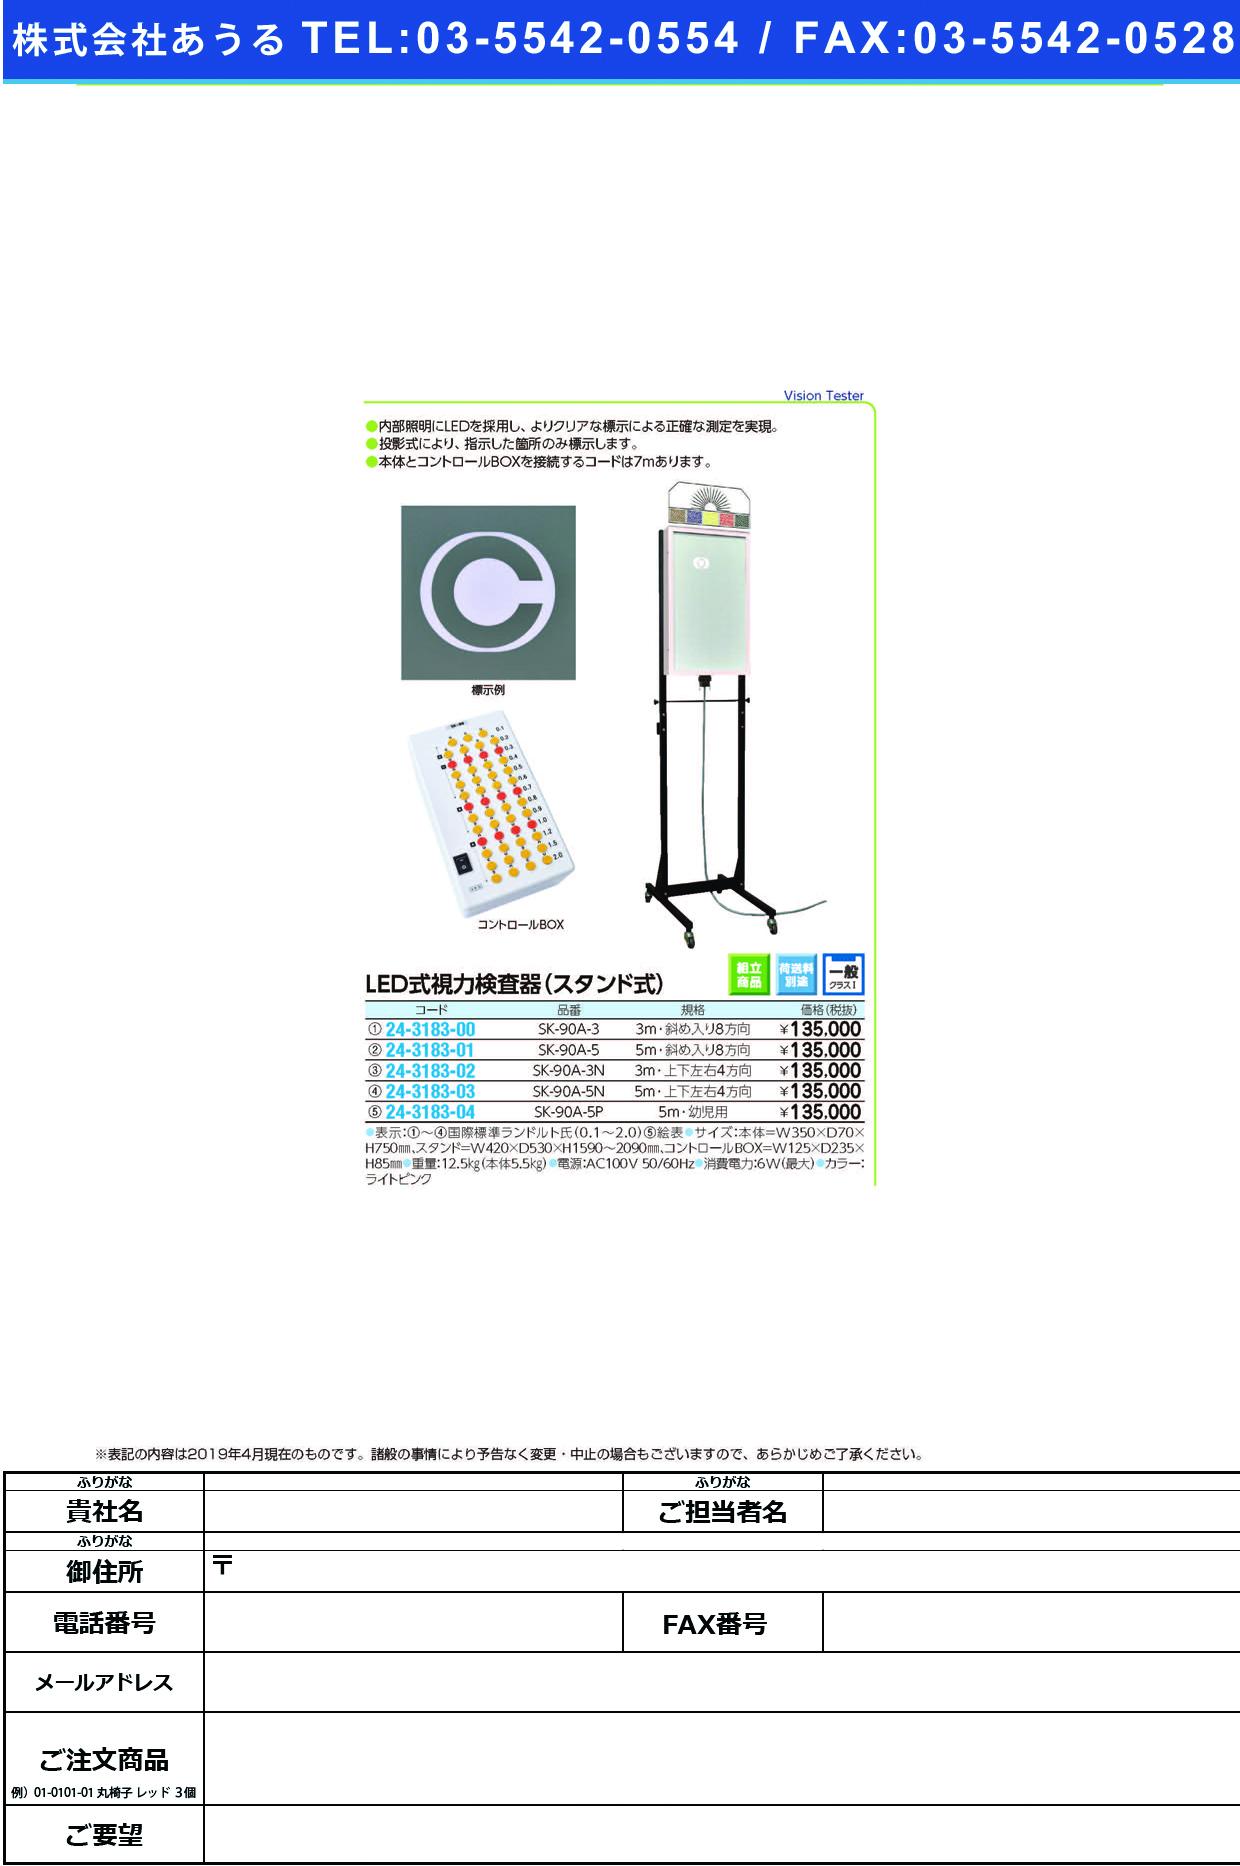 (24-3183-04)ＬＥＤ式視力検査器（スタンド式５ｍ用 SK-90A-5P(ﾖｳｼﾞﾖｳ) LEDｼｷｼﾘｮｸｹﾝｻｷｽﾀﾝﾄﾞｼｷ【1台単位】【2019年カタログ商品】